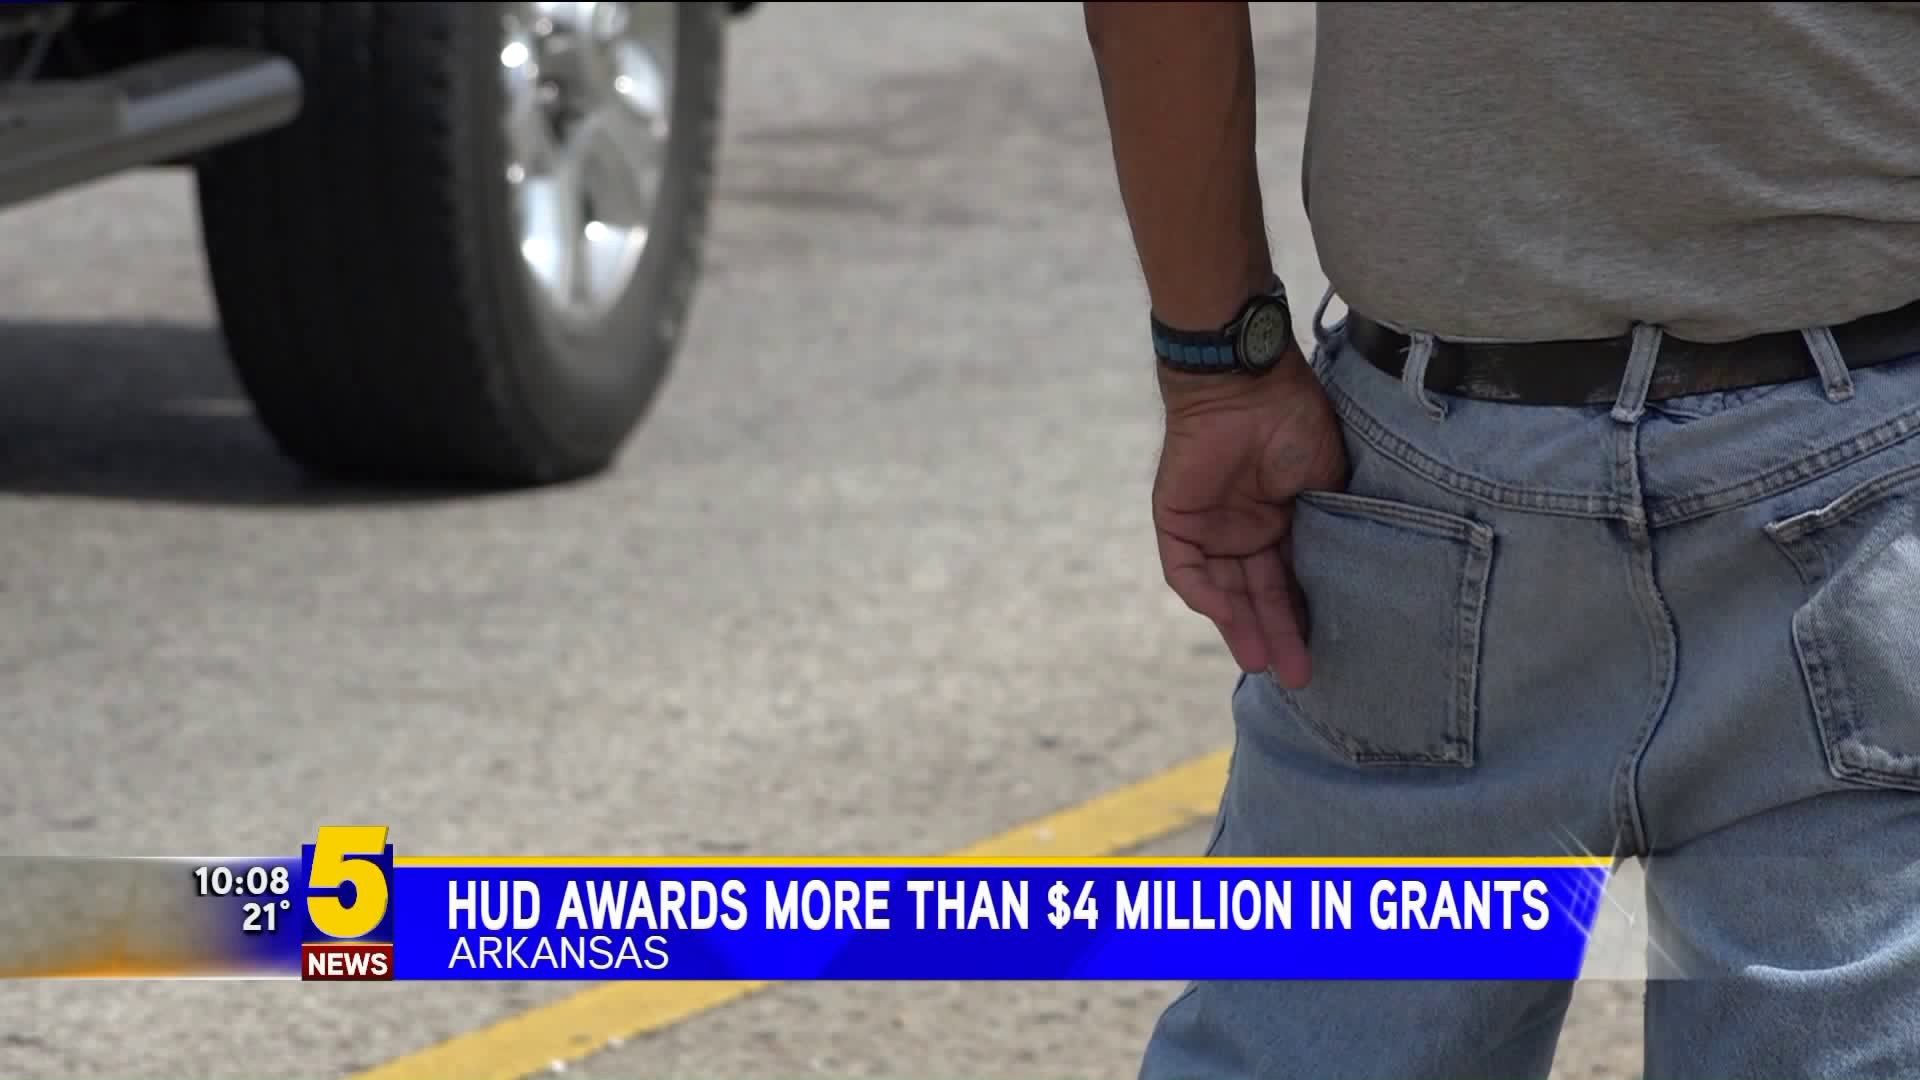 HUD Awards More Than $4 Million in Grants